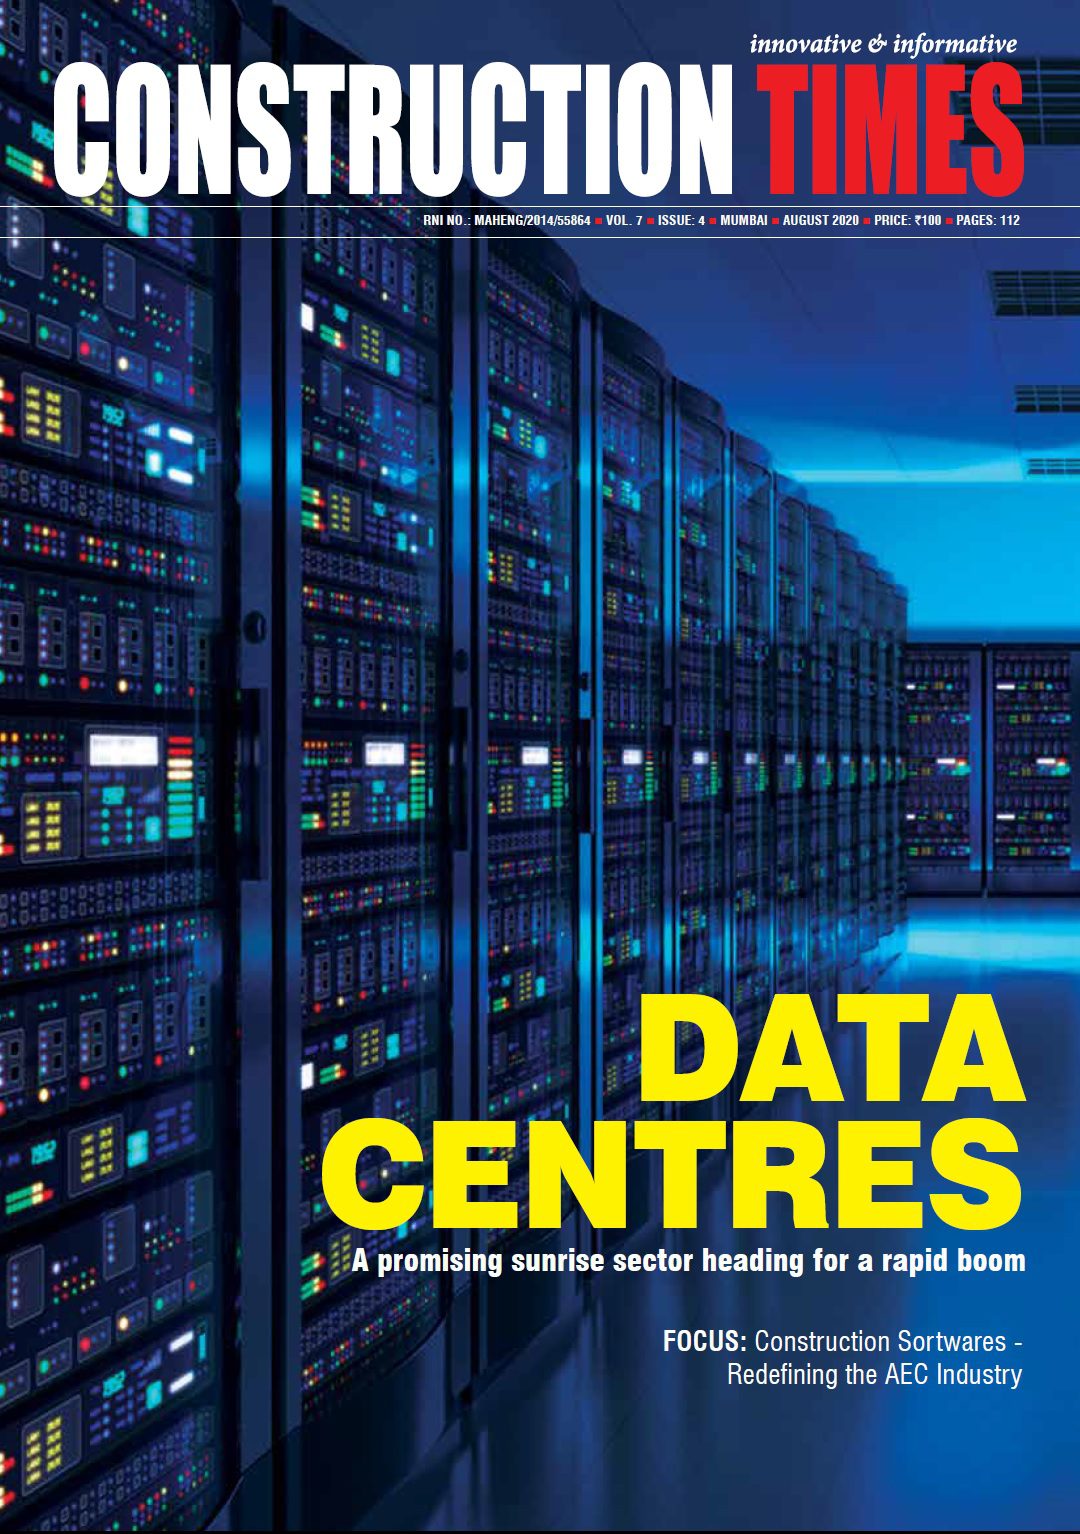 Data centers